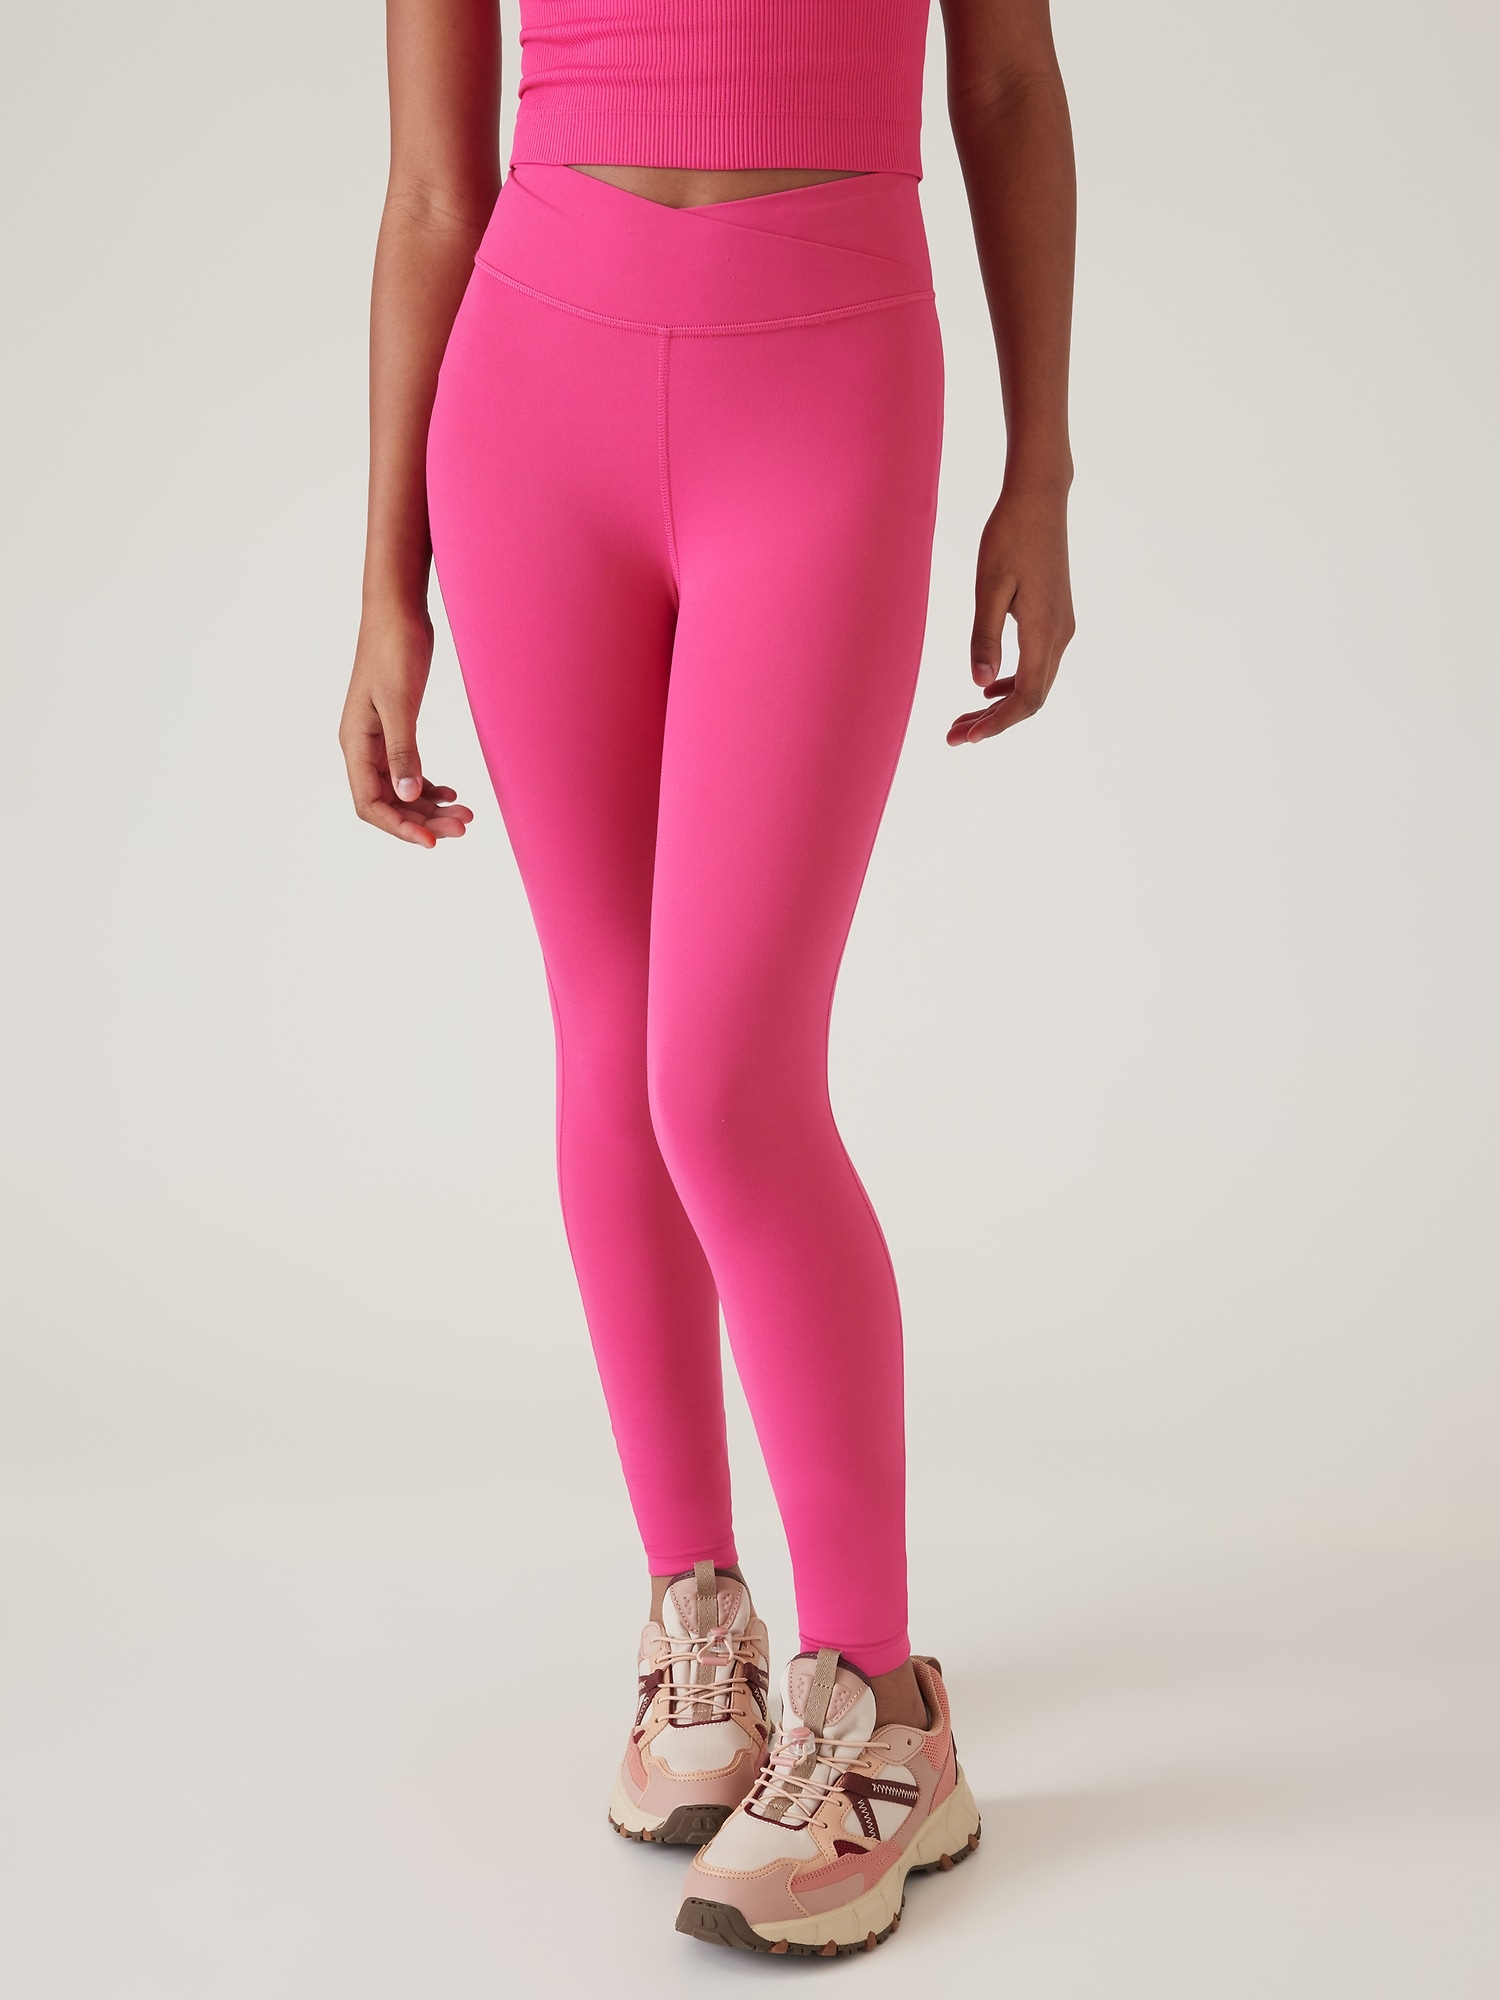 Athleta Floral Multi Color Pink Leggings Size XS - 65% off